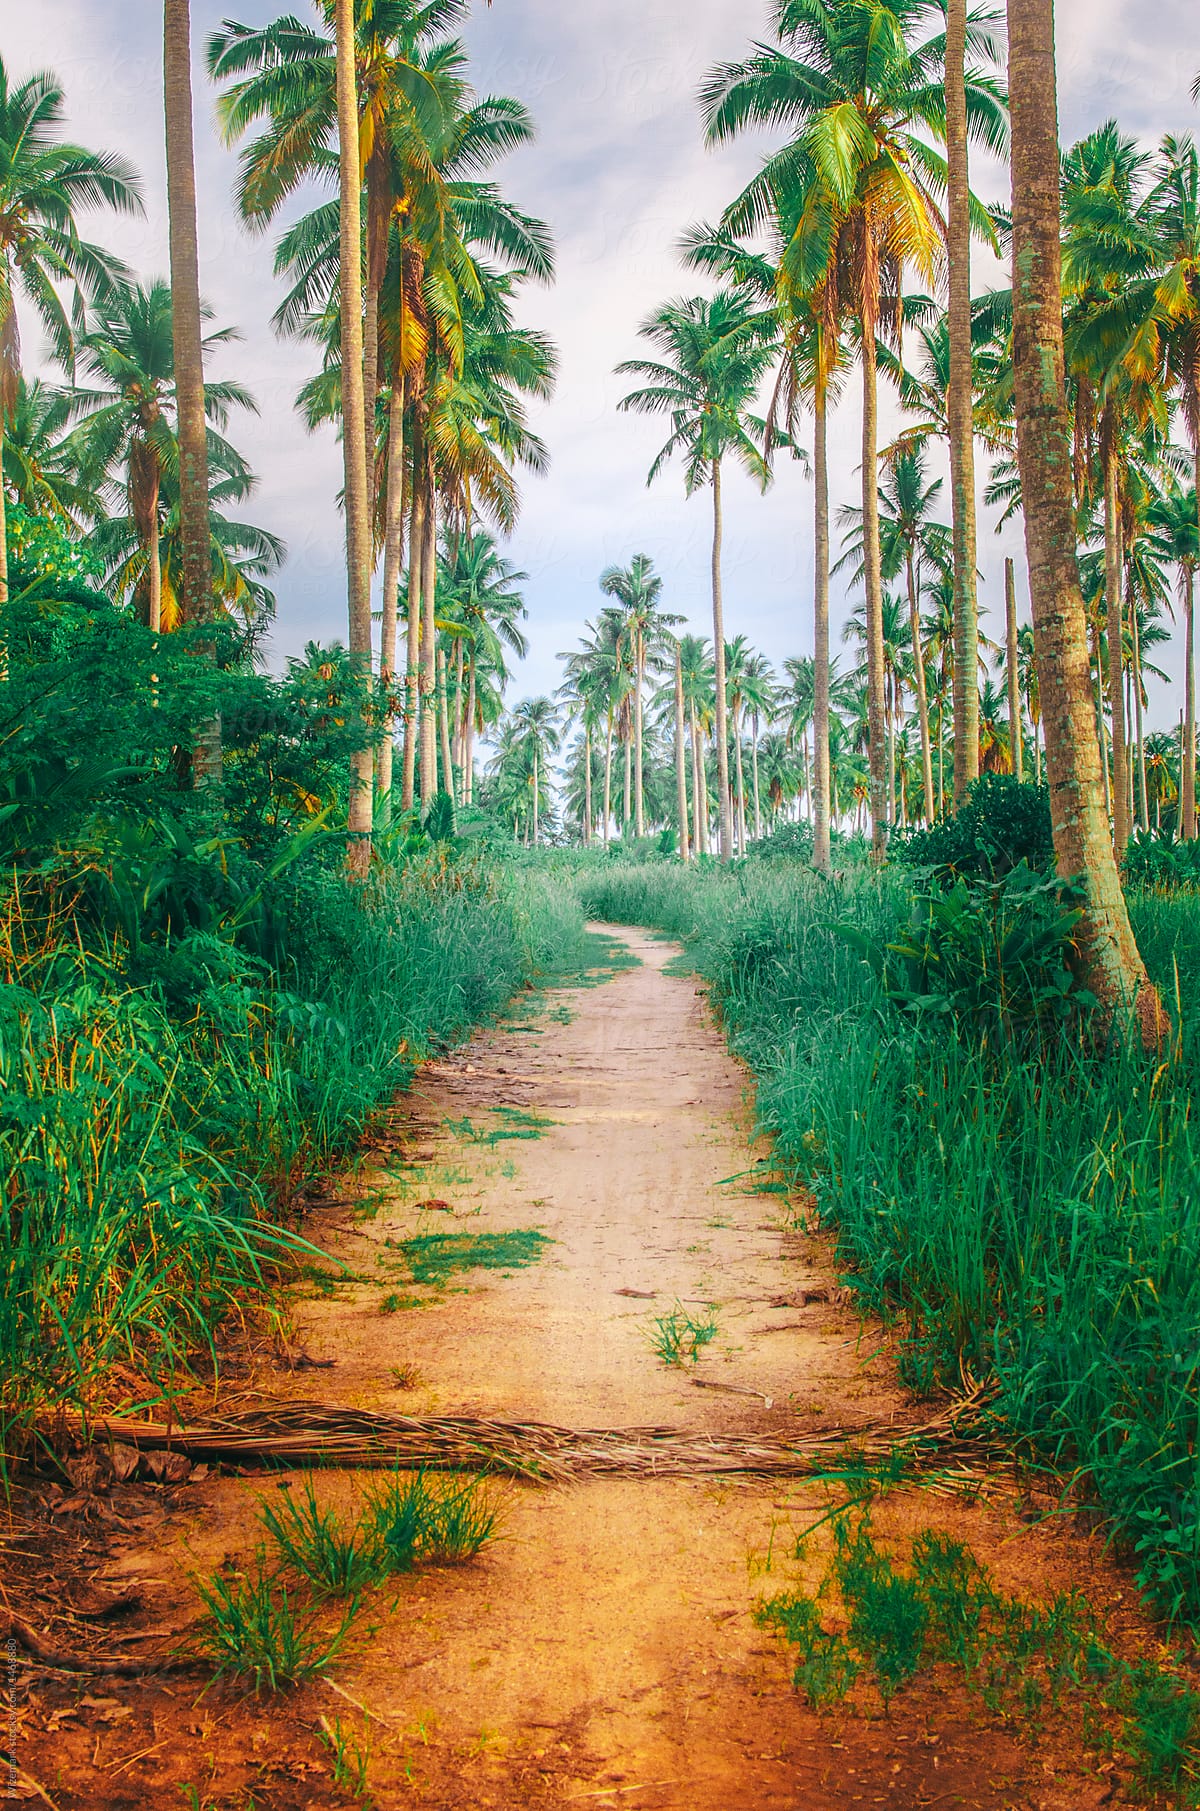 Island palm trees